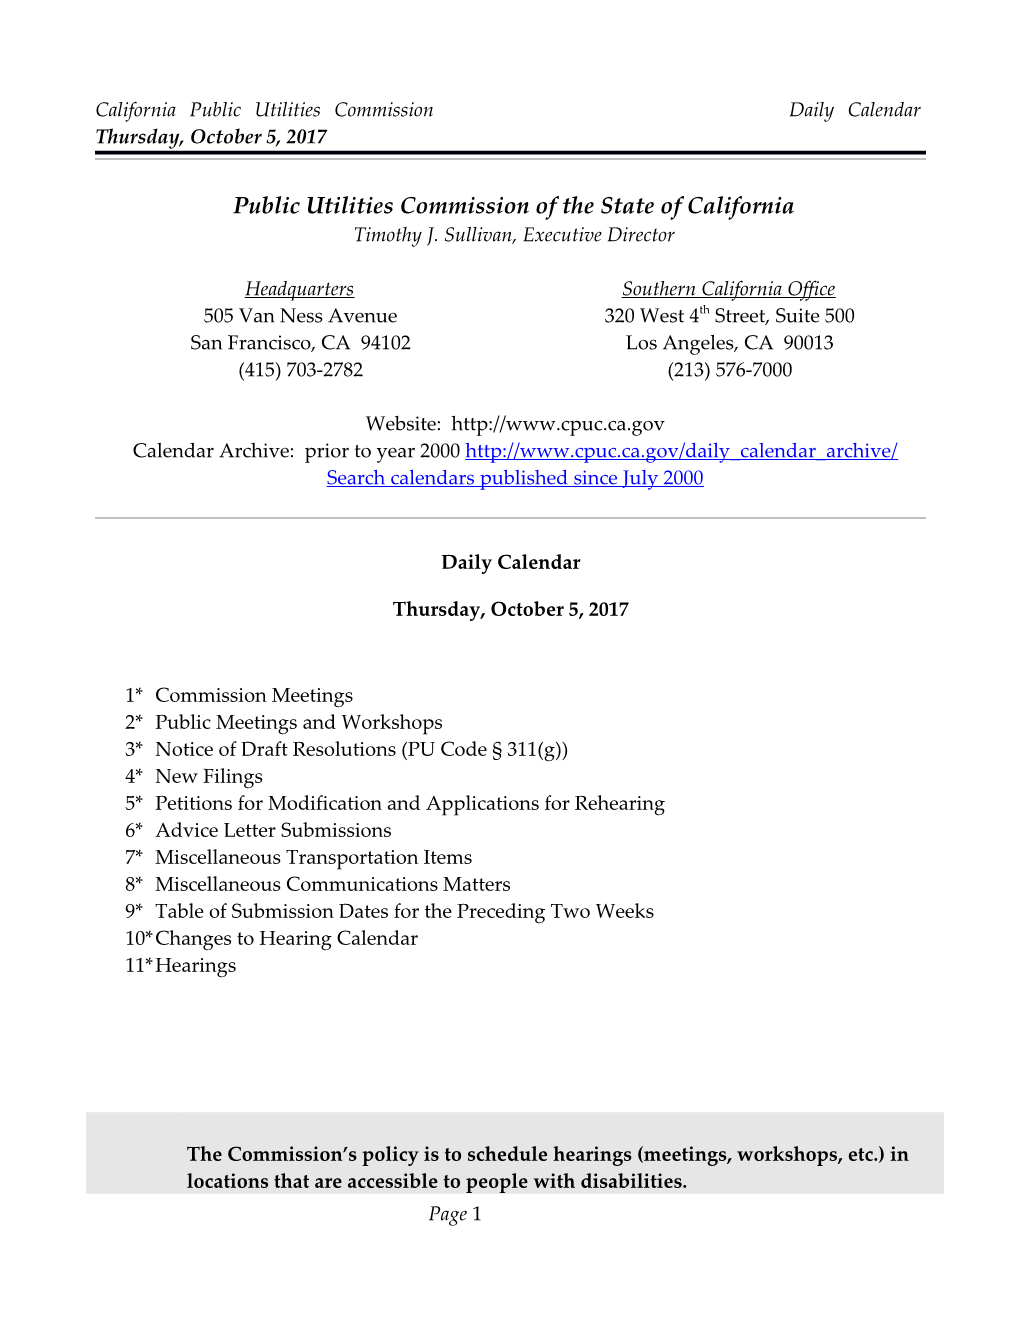 California Public Utilities Commission Daily Calendar Thursday, October 5, 2017